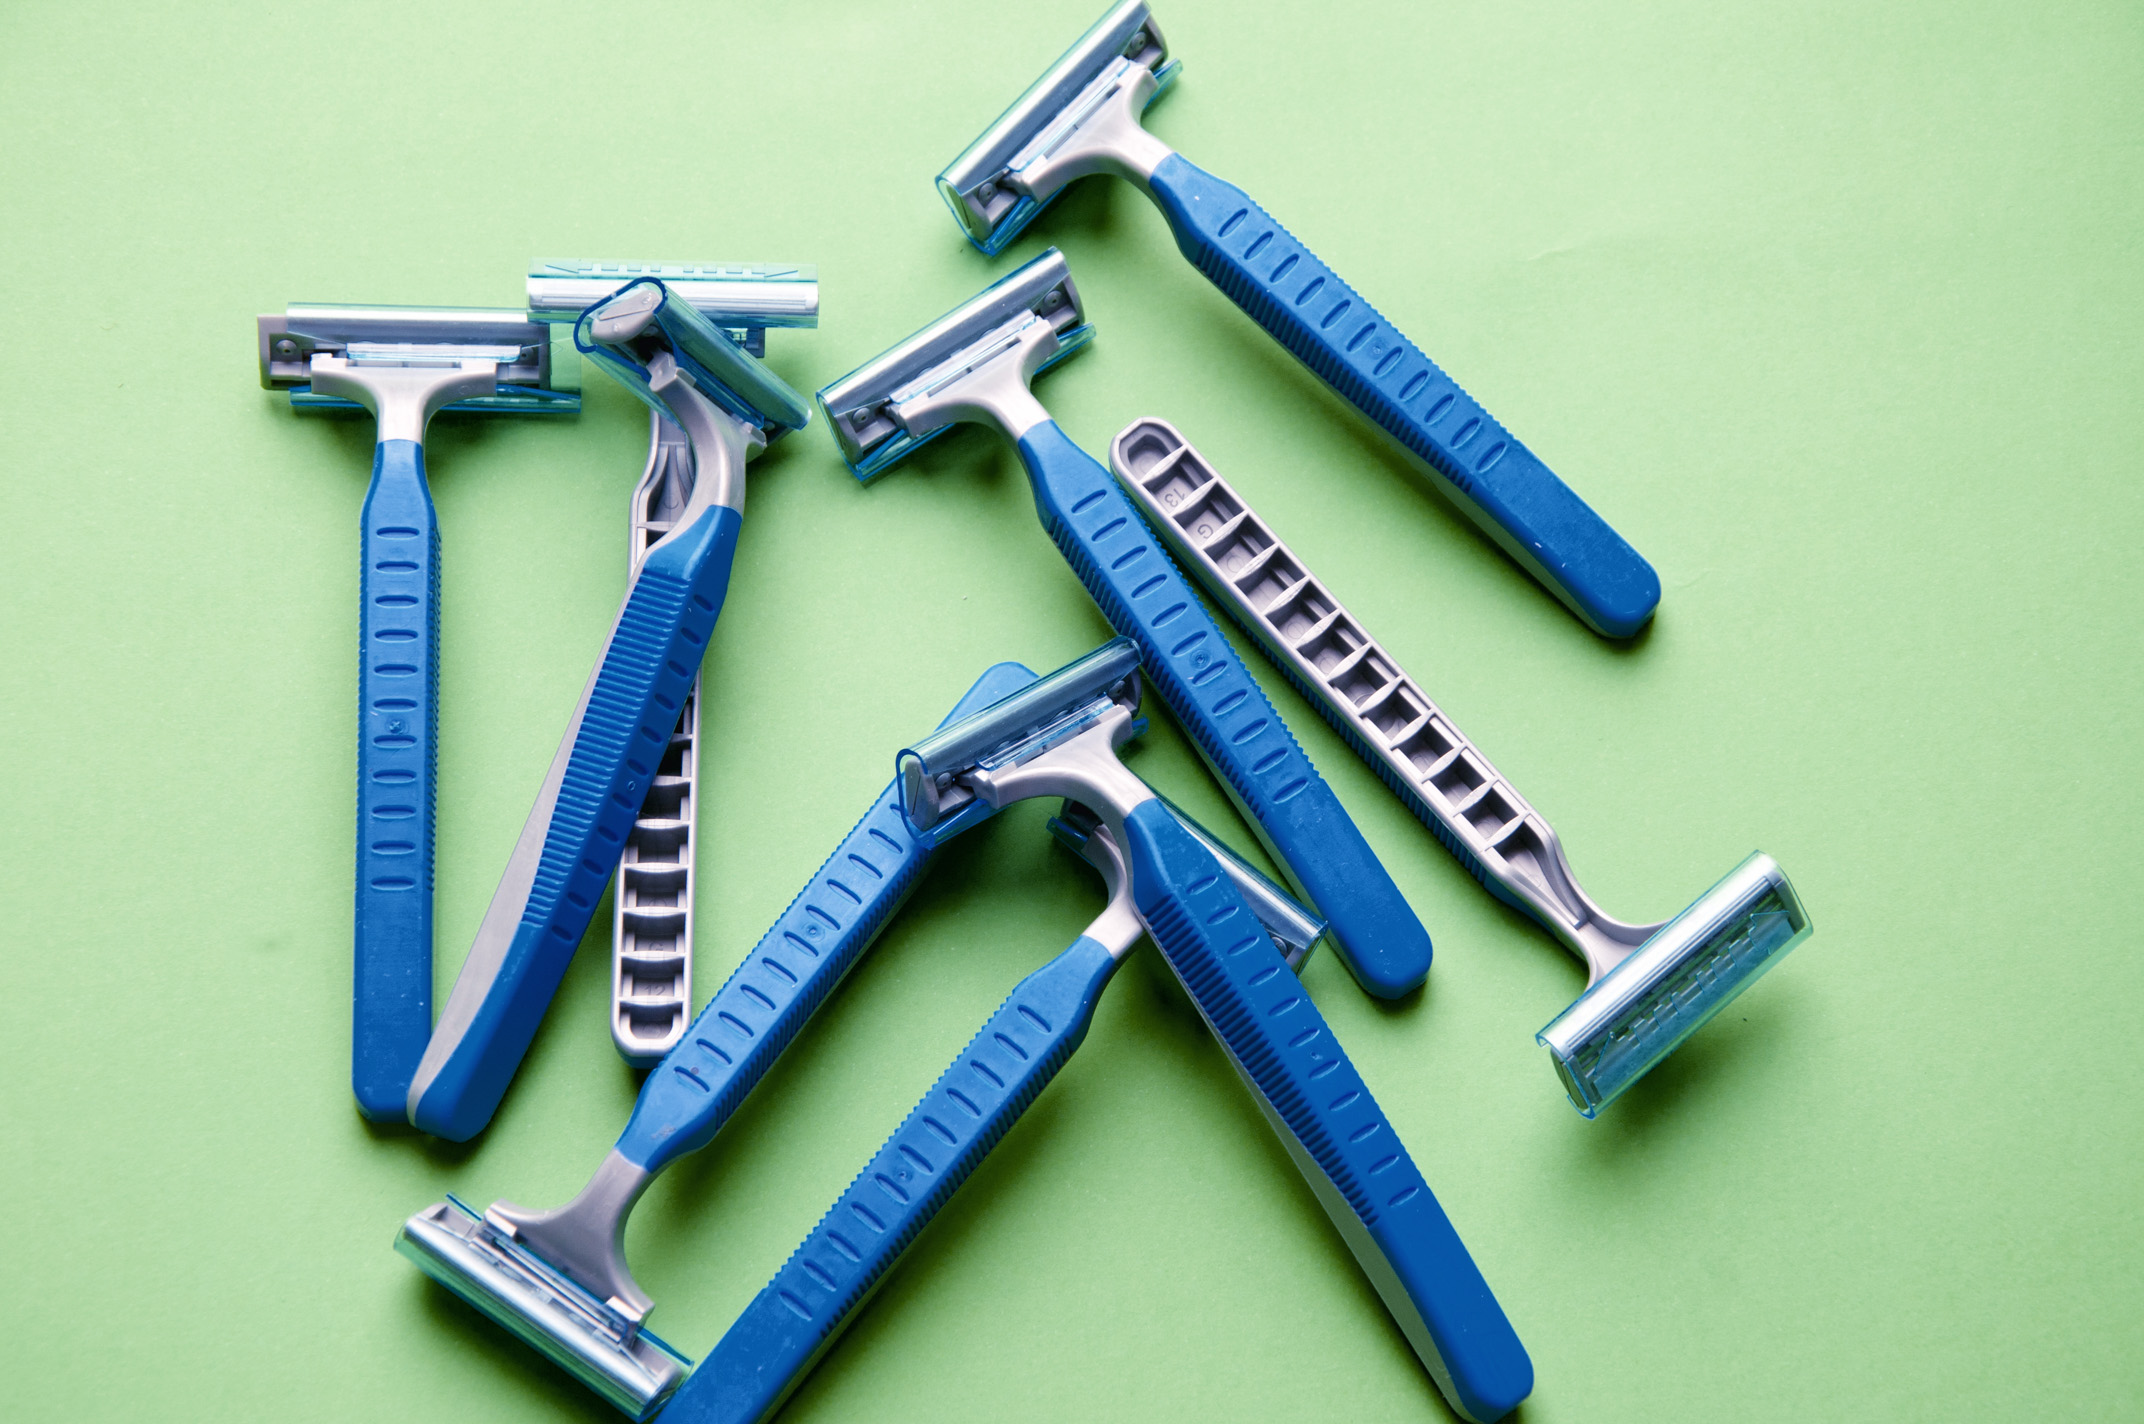 A stack of shaving razors.